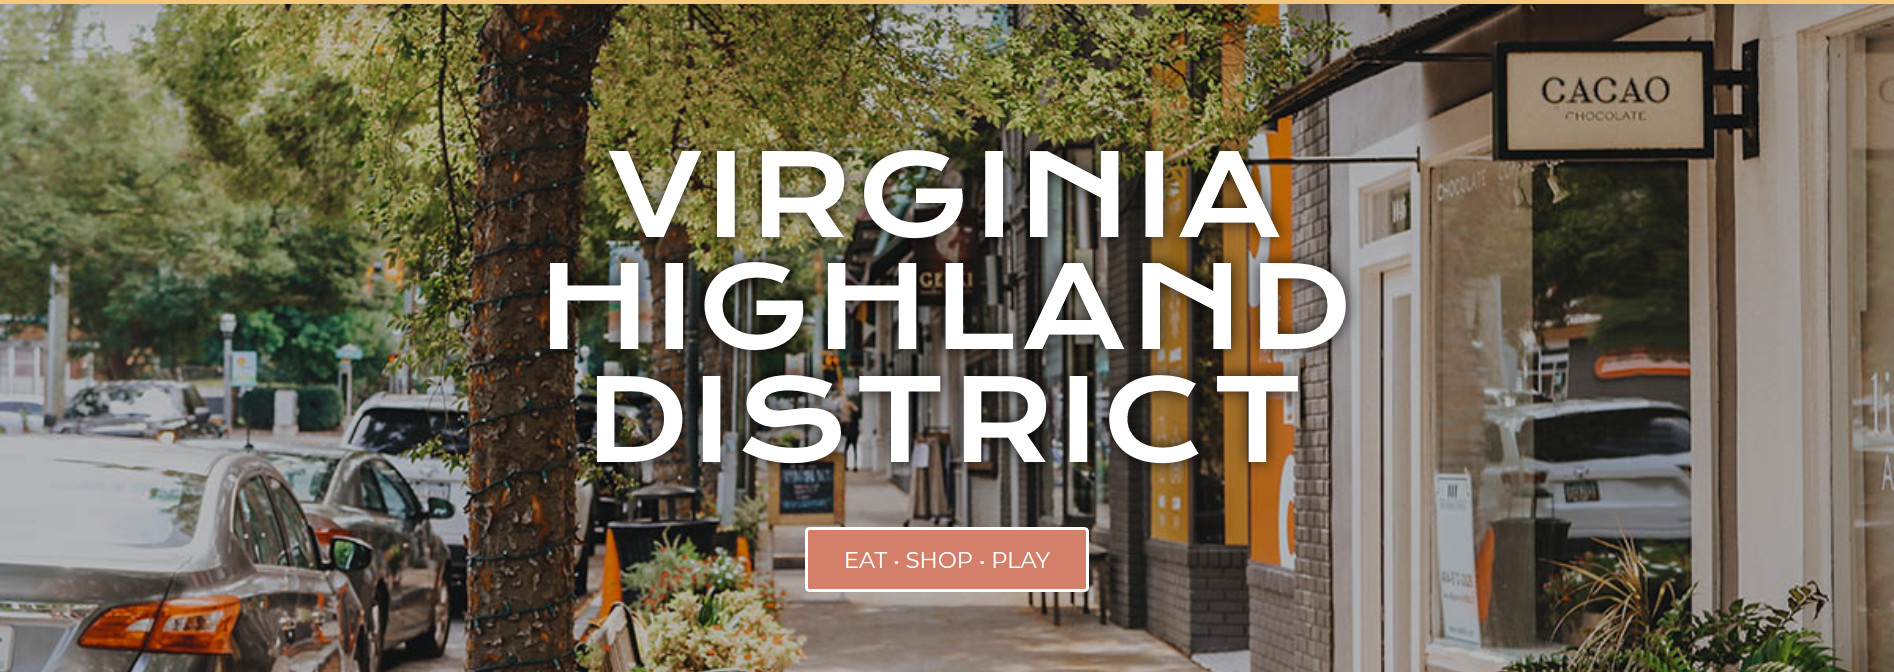 Virginia Highland District